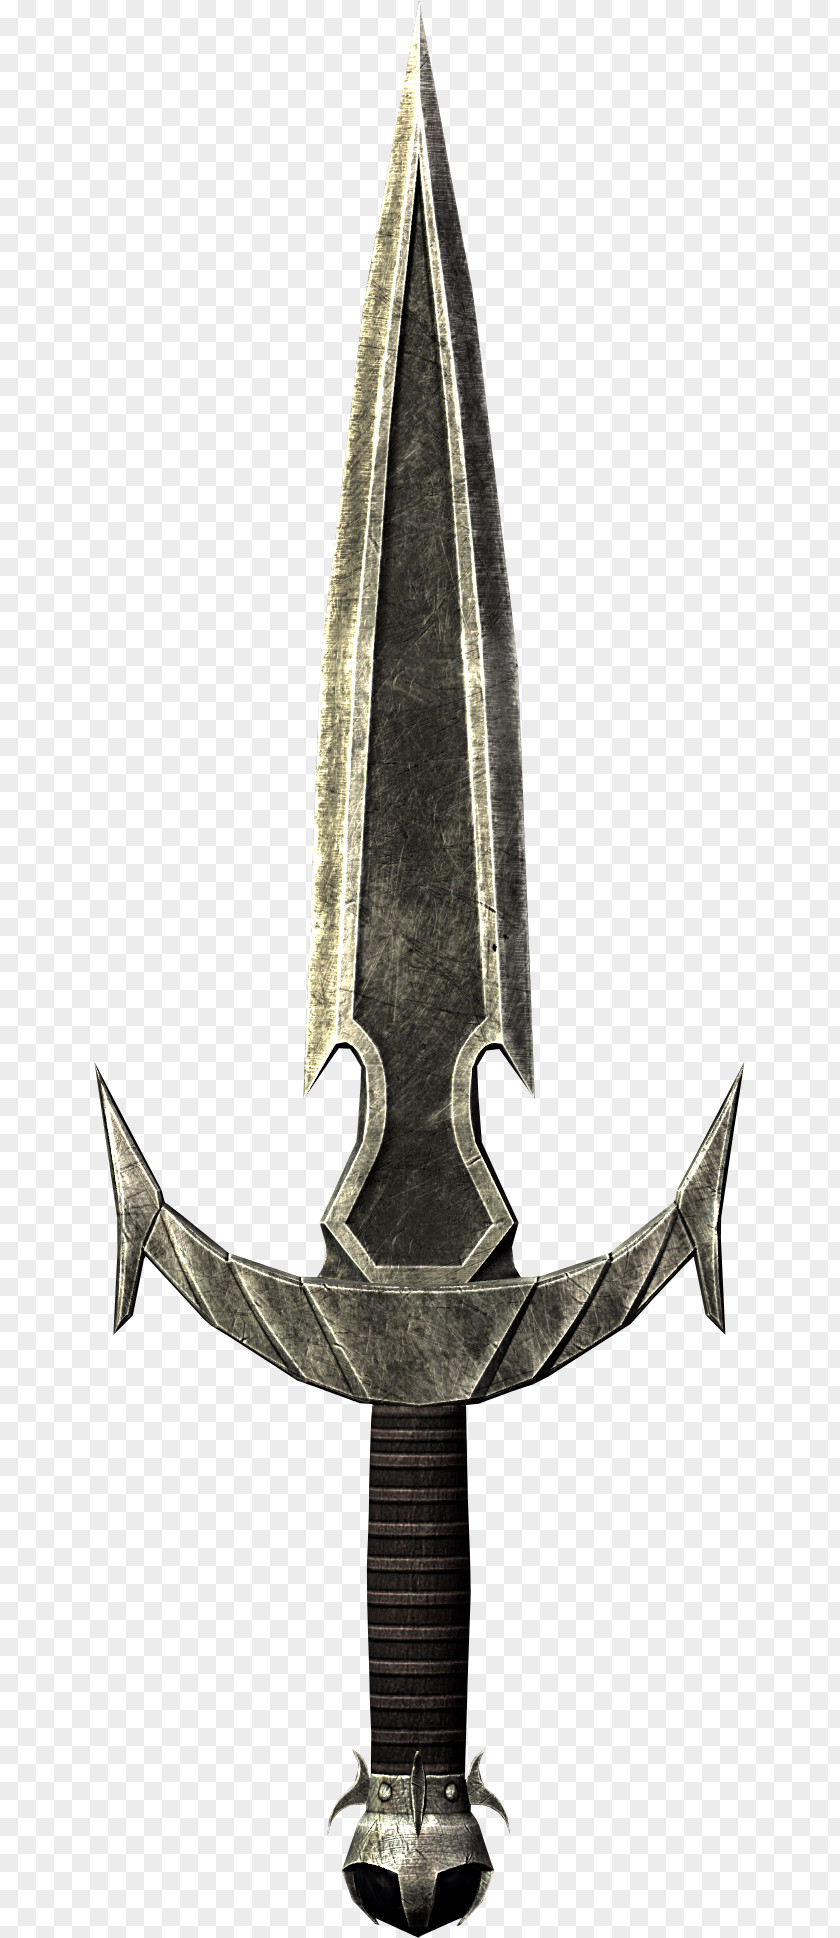 Dagger The Elder Scrolls V: Skyrim Oblivion III: Morrowind Sword Weapon PNG